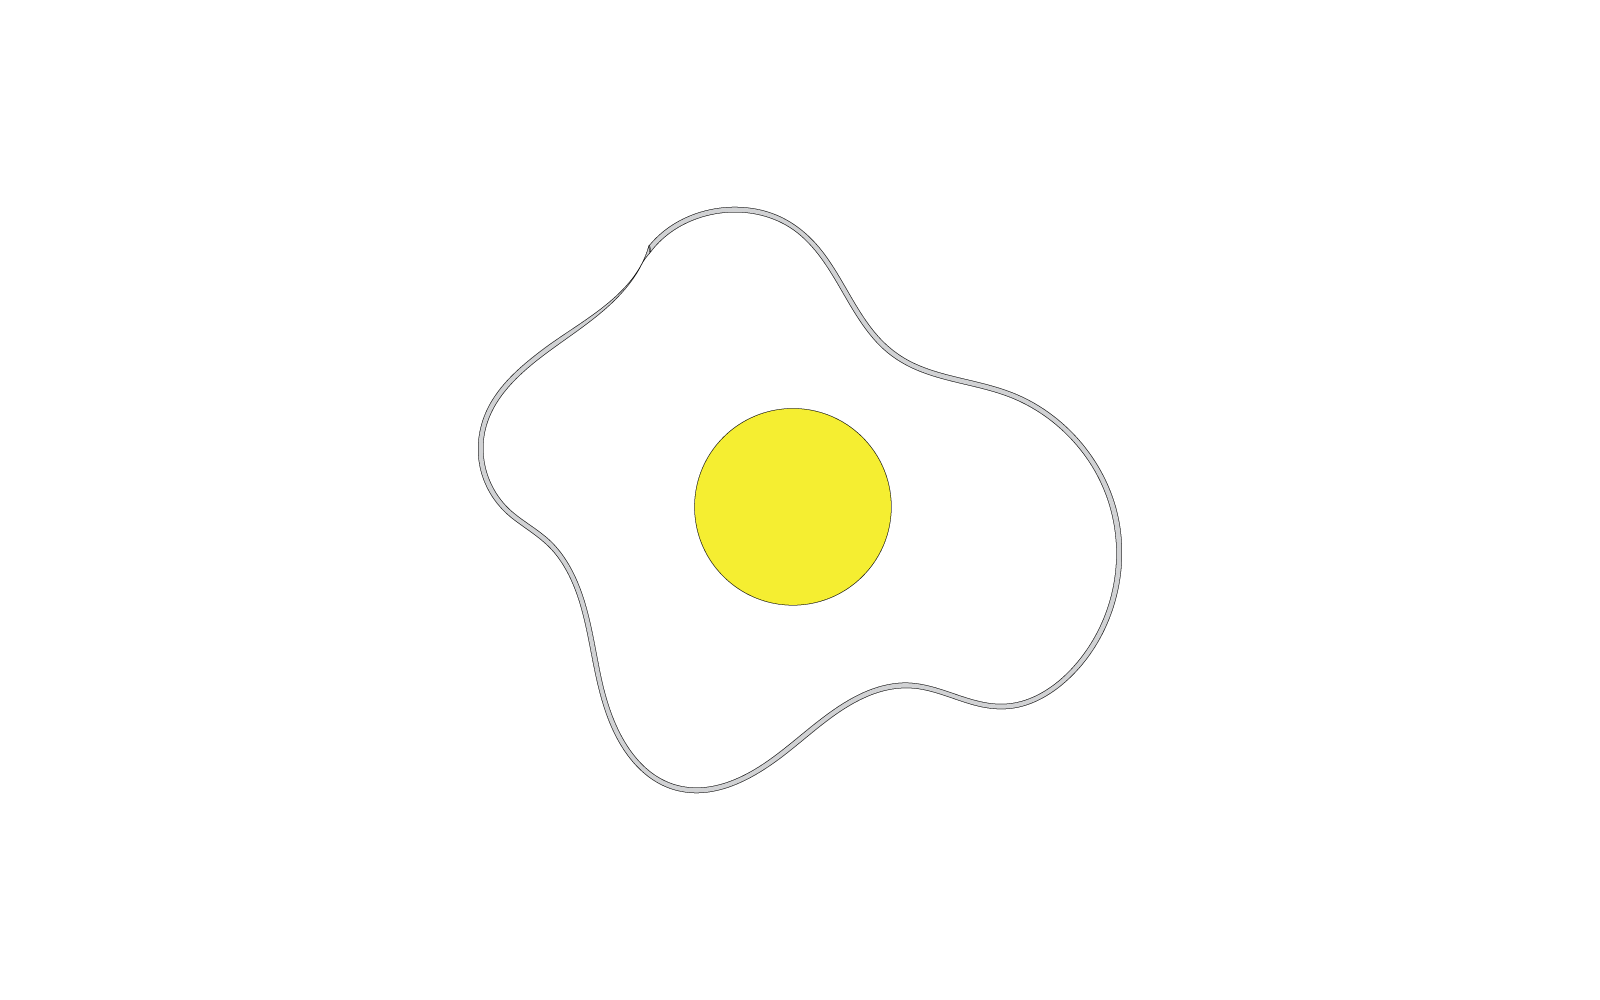 Egg illustration vector flat design